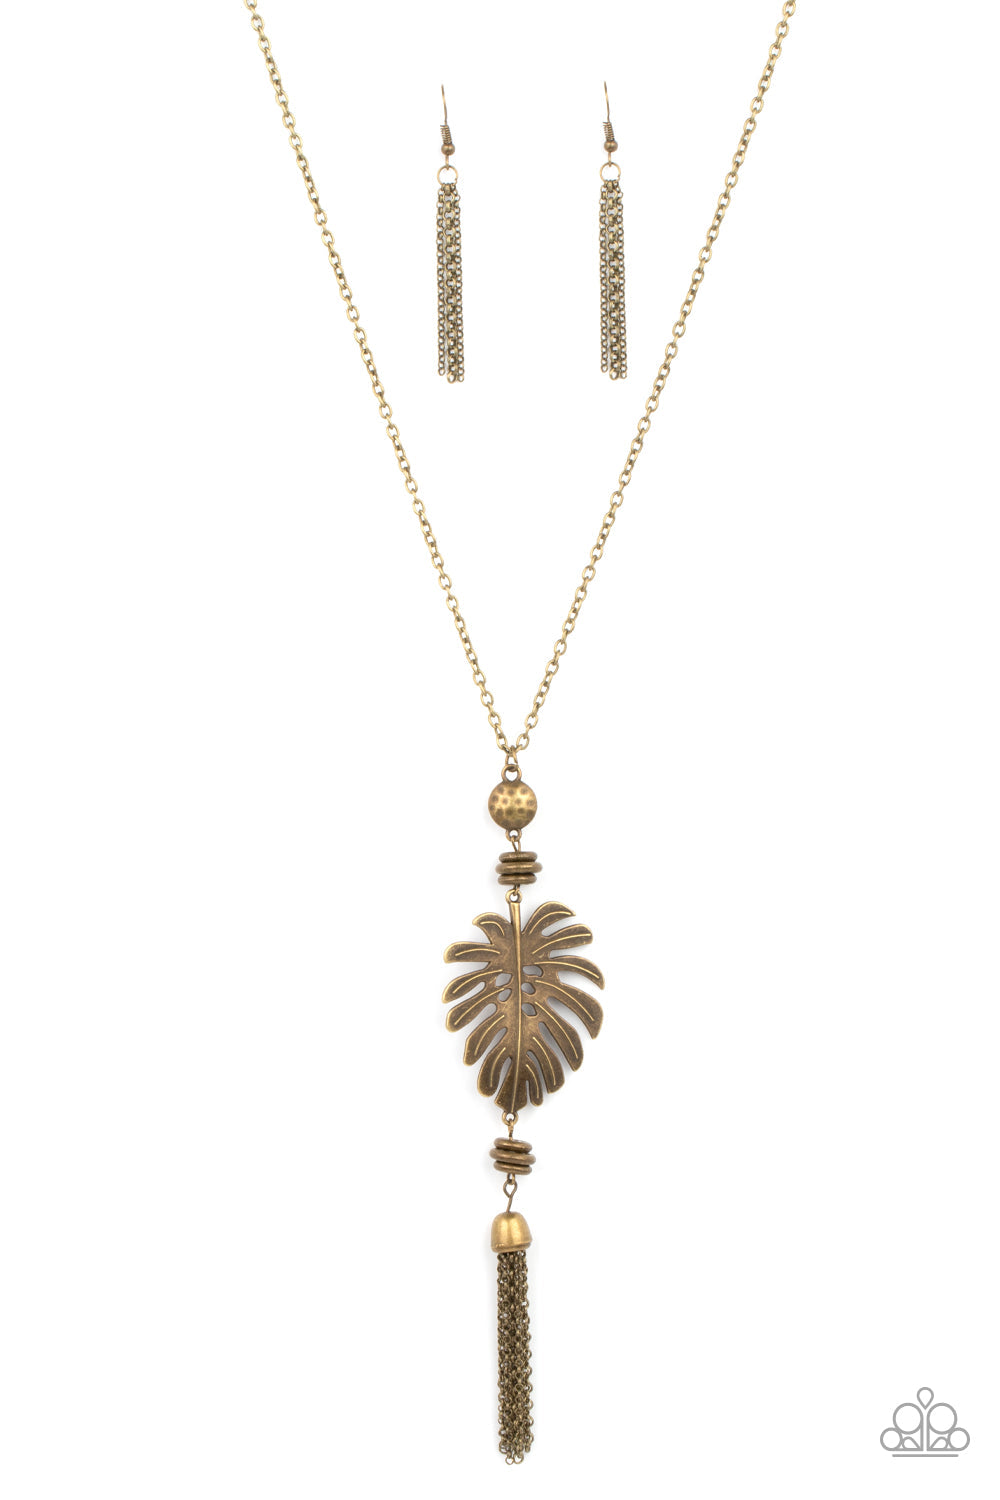 PRE-ORDER - Paparazzi Palm Promenade - Brass - Necklace & Earrings - $5 Jewelry with Ashley Swint